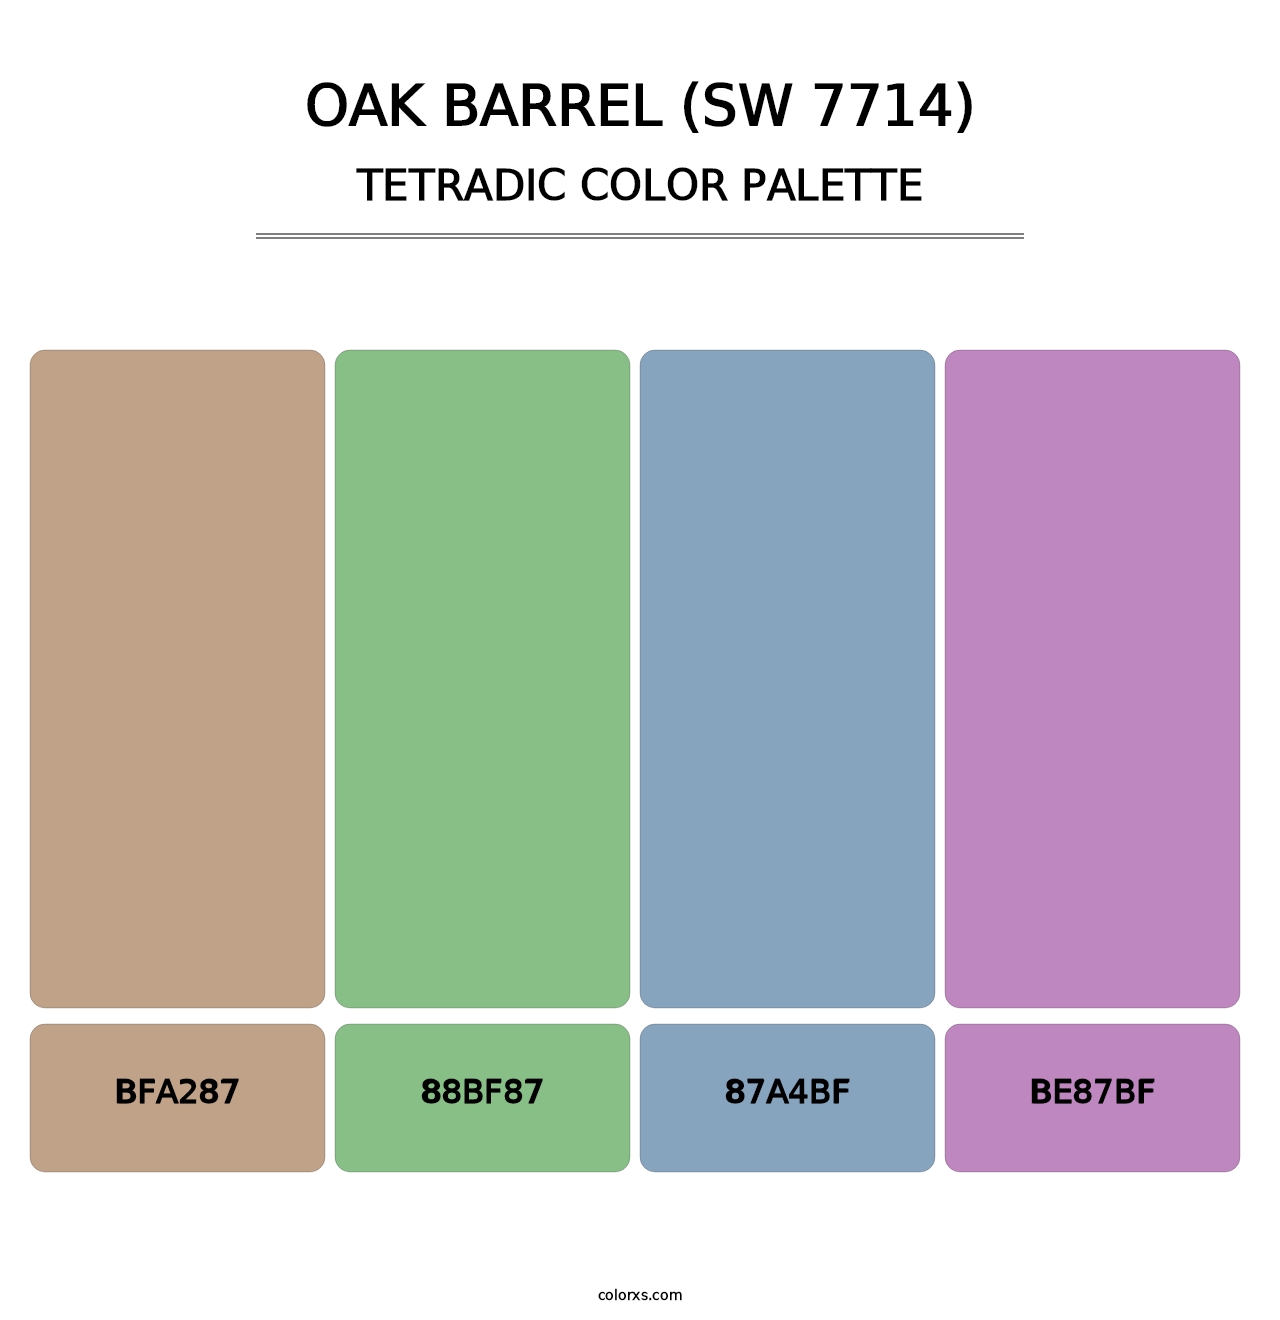 Oak Barrel (SW 7714) - Tetradic Color Palette